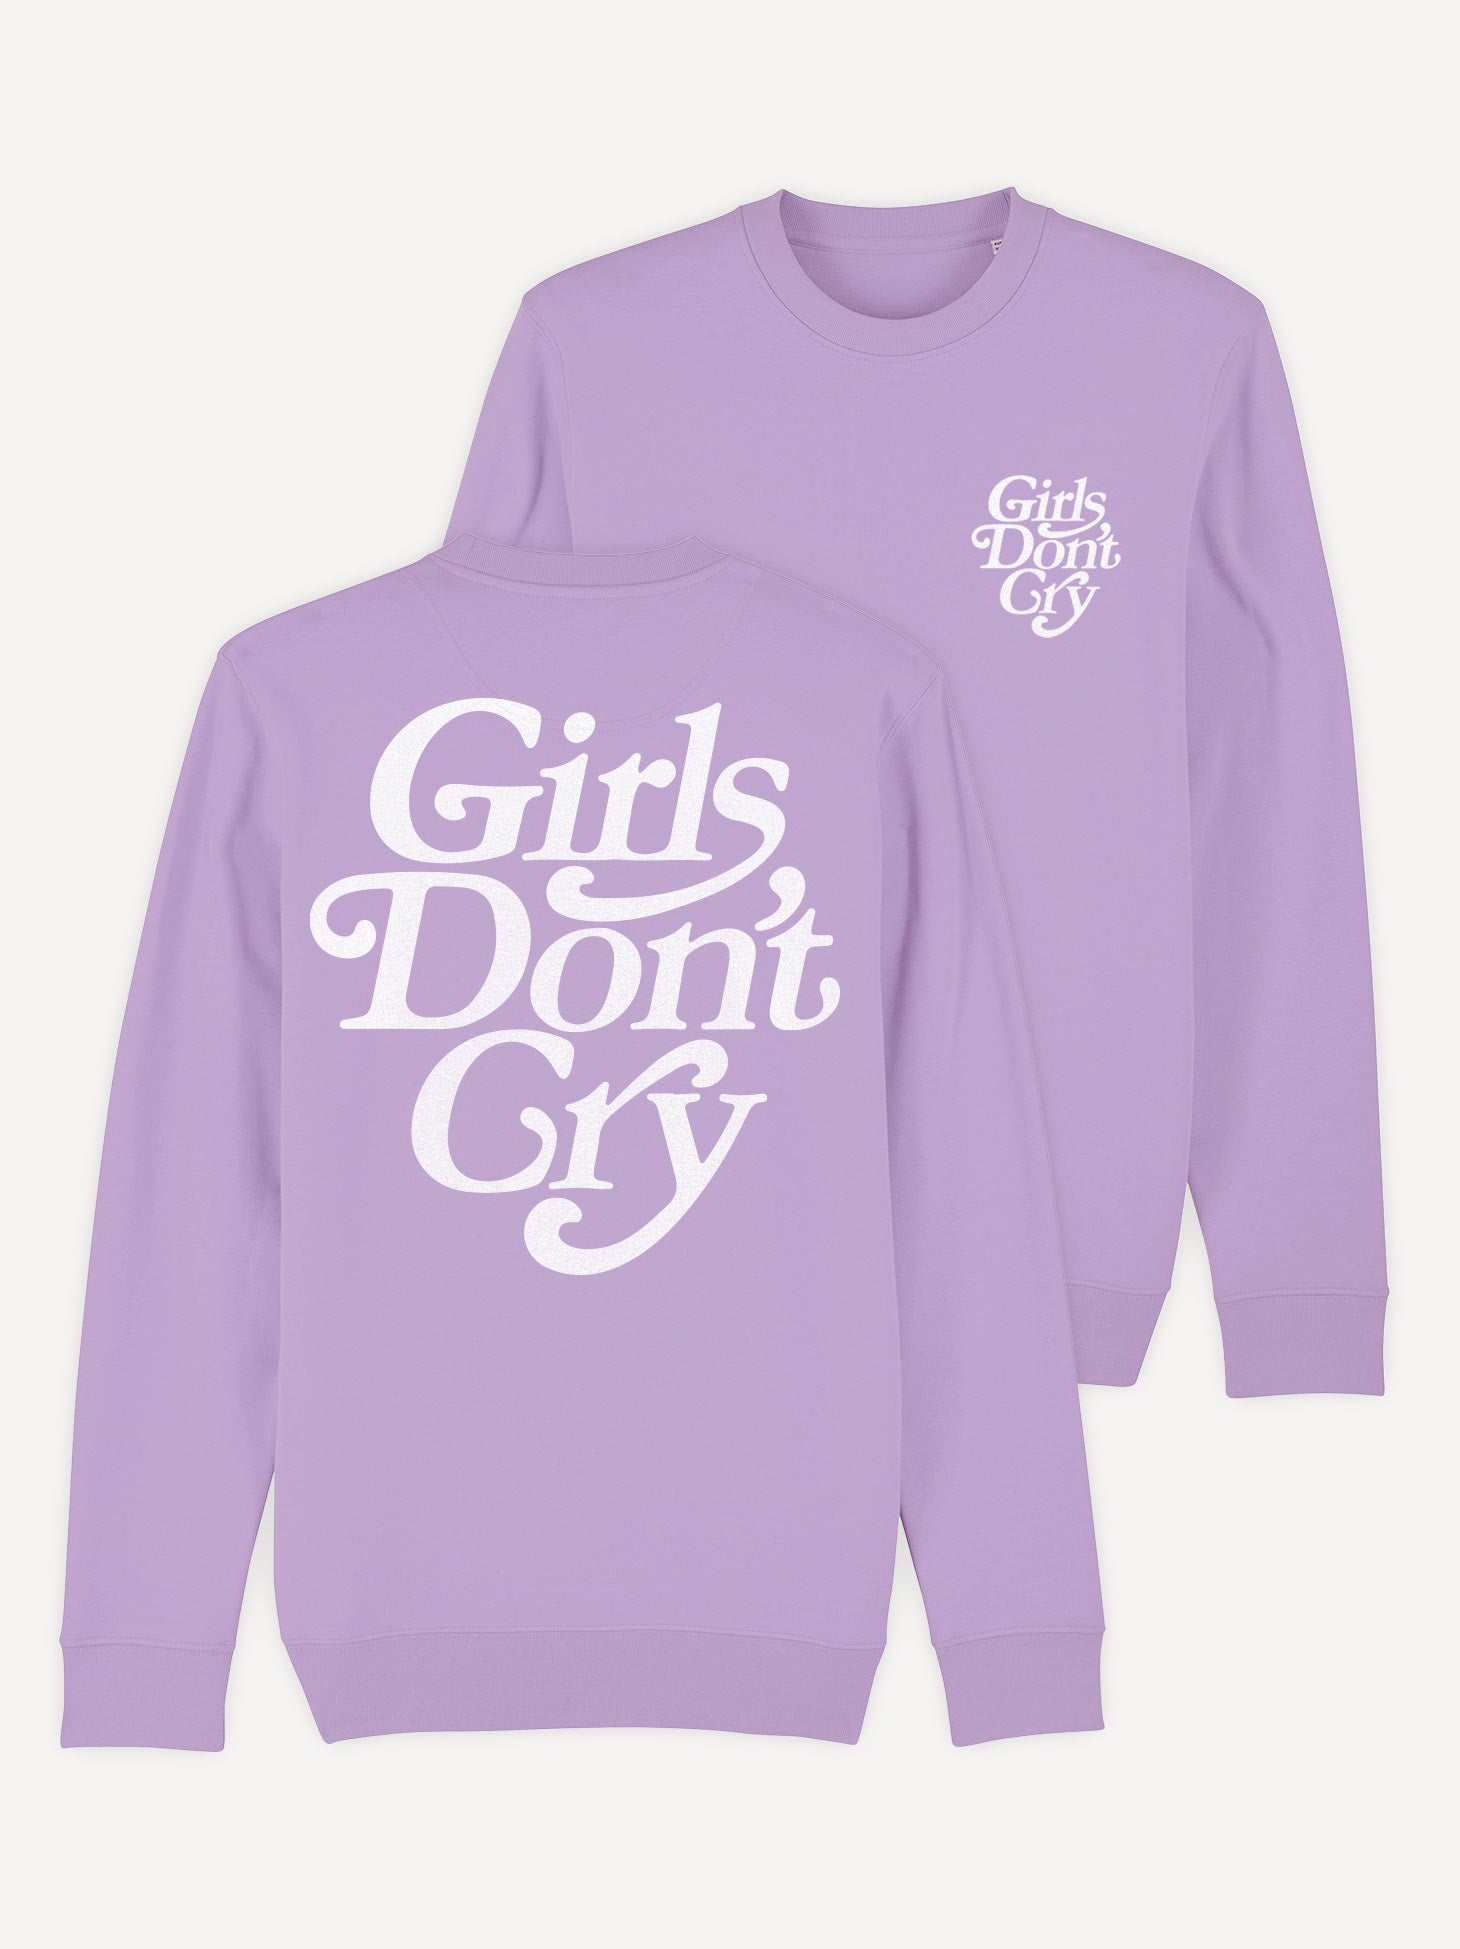 Girls Don't Cry Sweatshirt